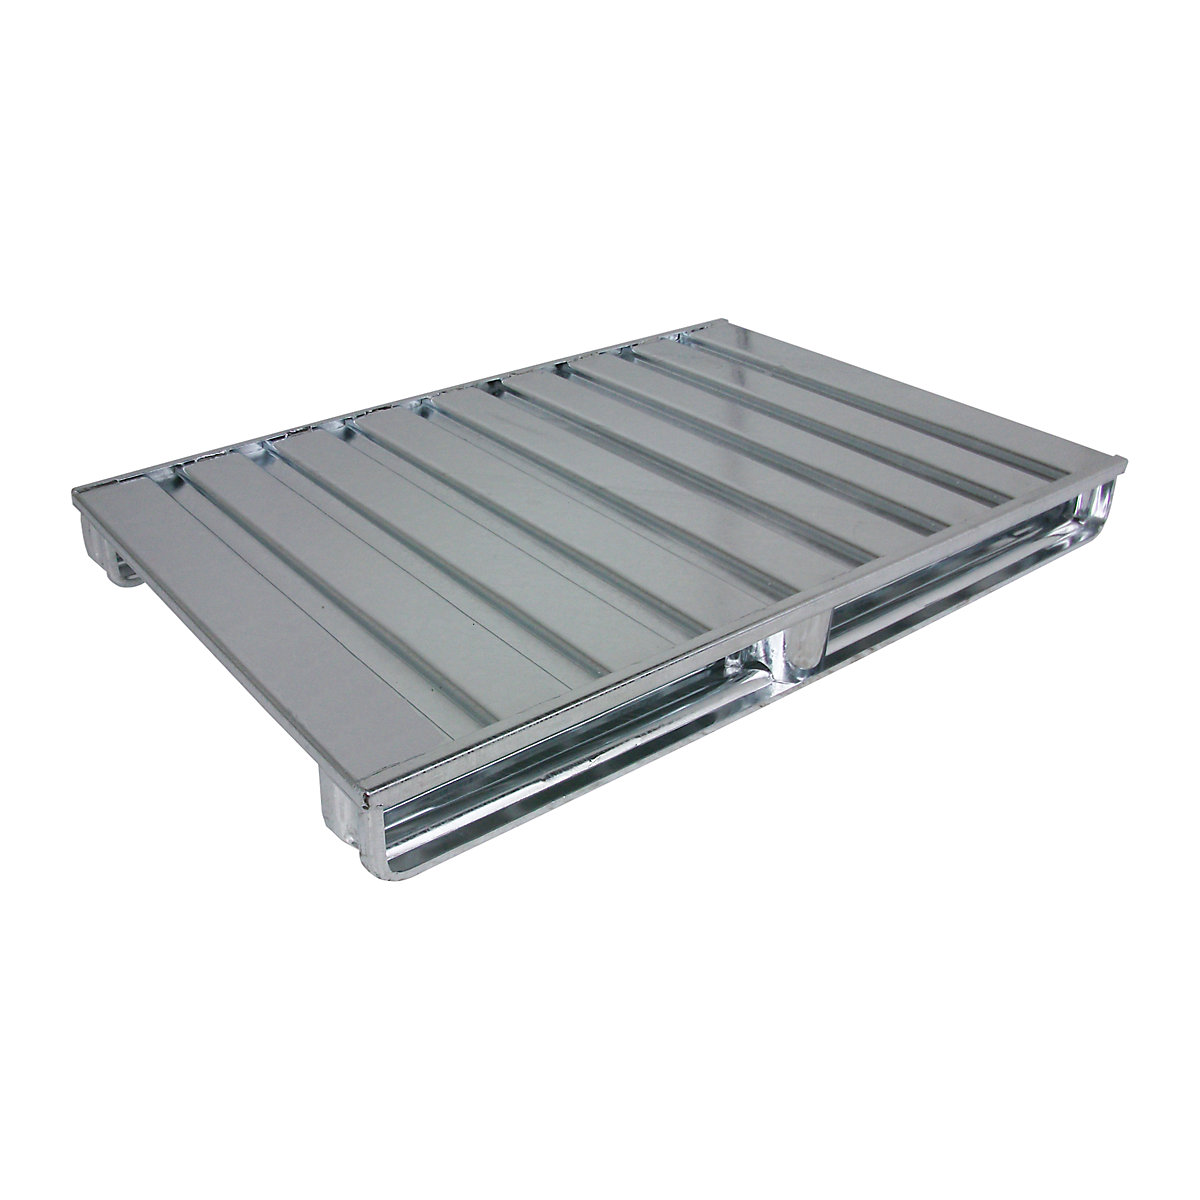 Palet plano de acero – Heson, L x A 1200 x 800 mm, carga máx. 2000 kg, galvanizado-2